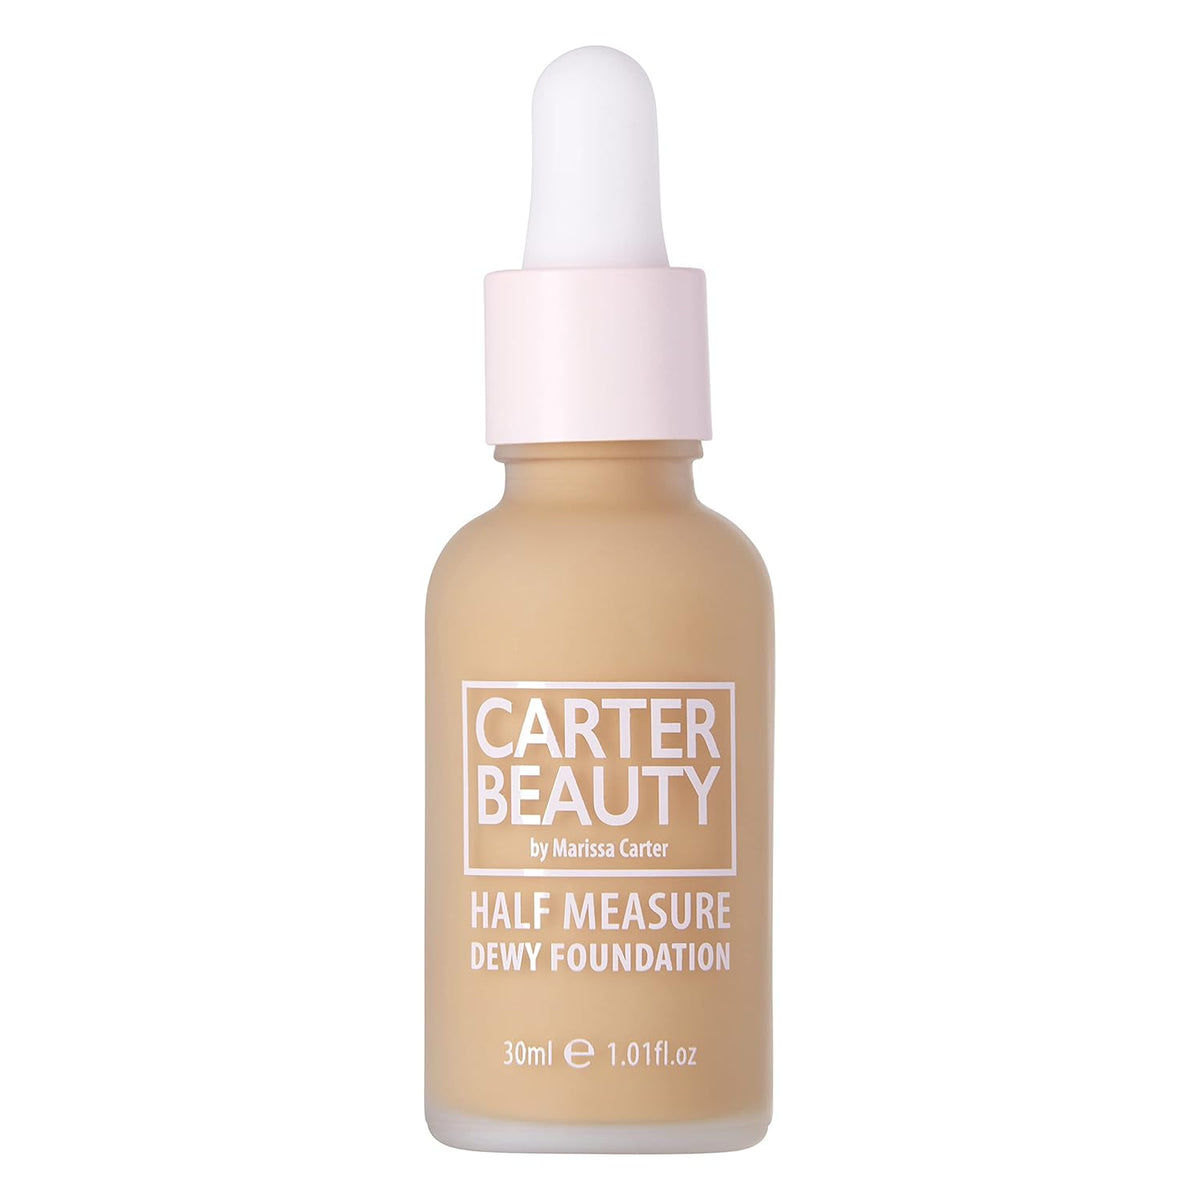 Carter Beauty Half Measure Dewy Foundation, Sticky Toffee